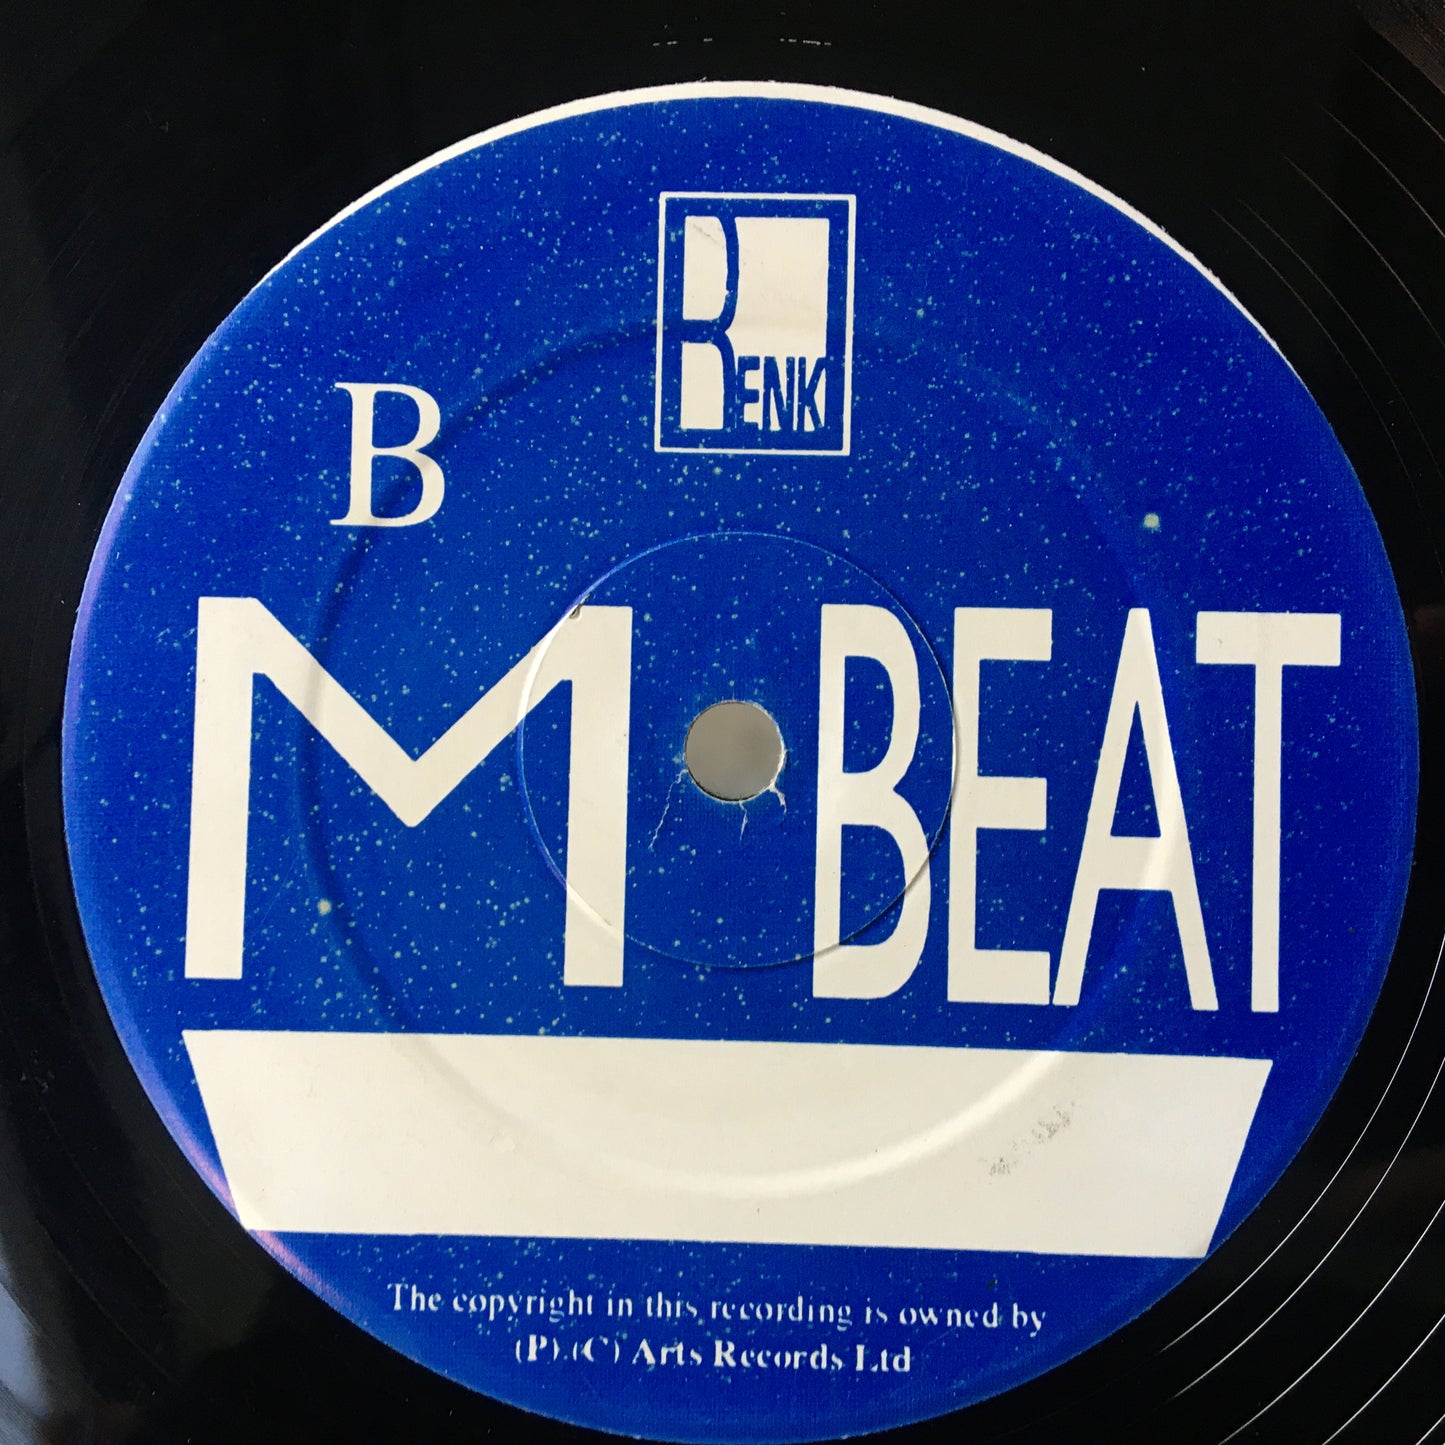 M-Beat——风格